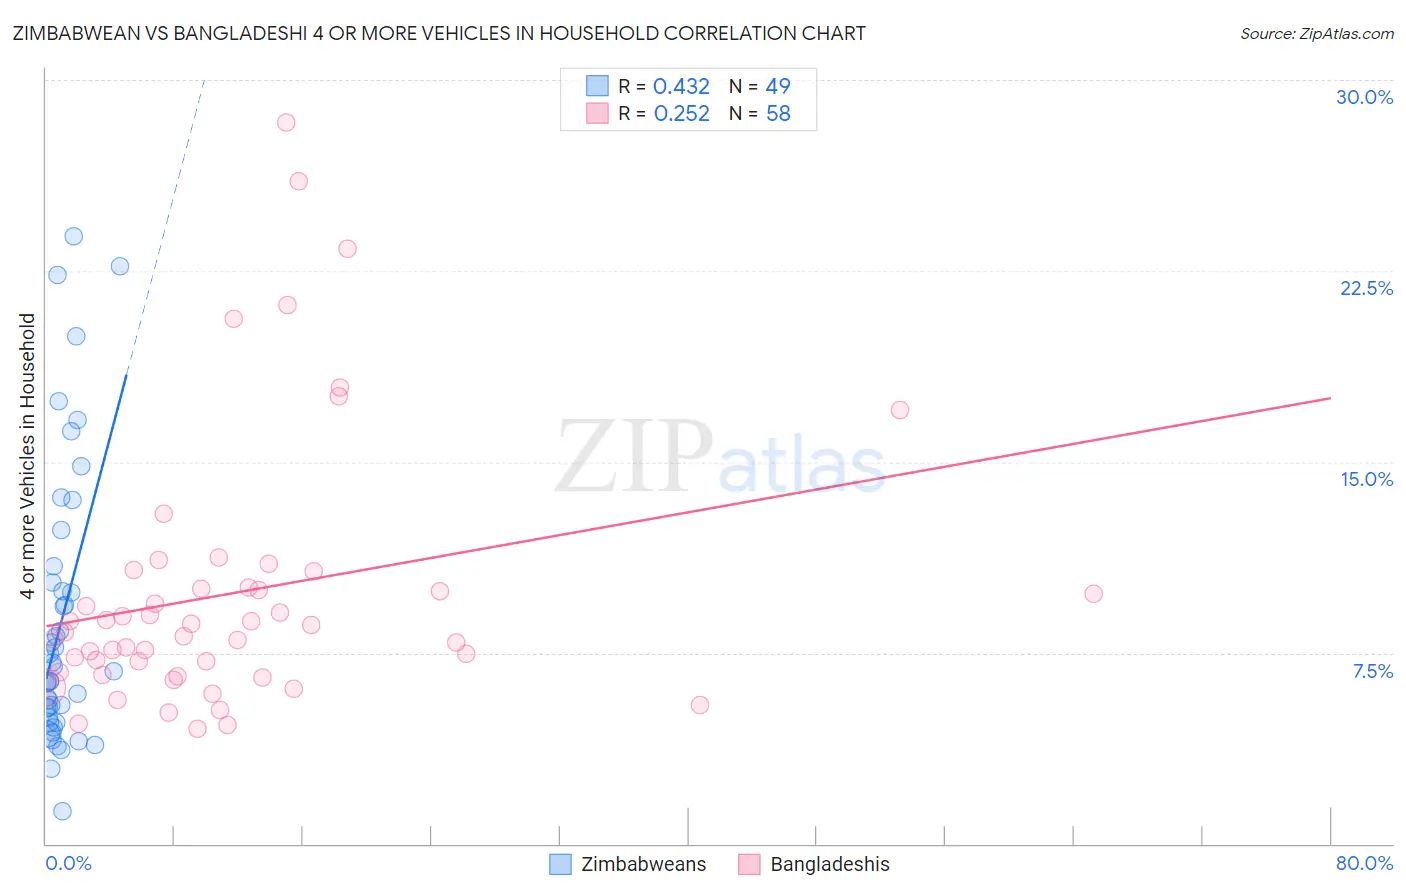 Zimbabwean vs Bangladeshi 4 or more Vehicles in Household